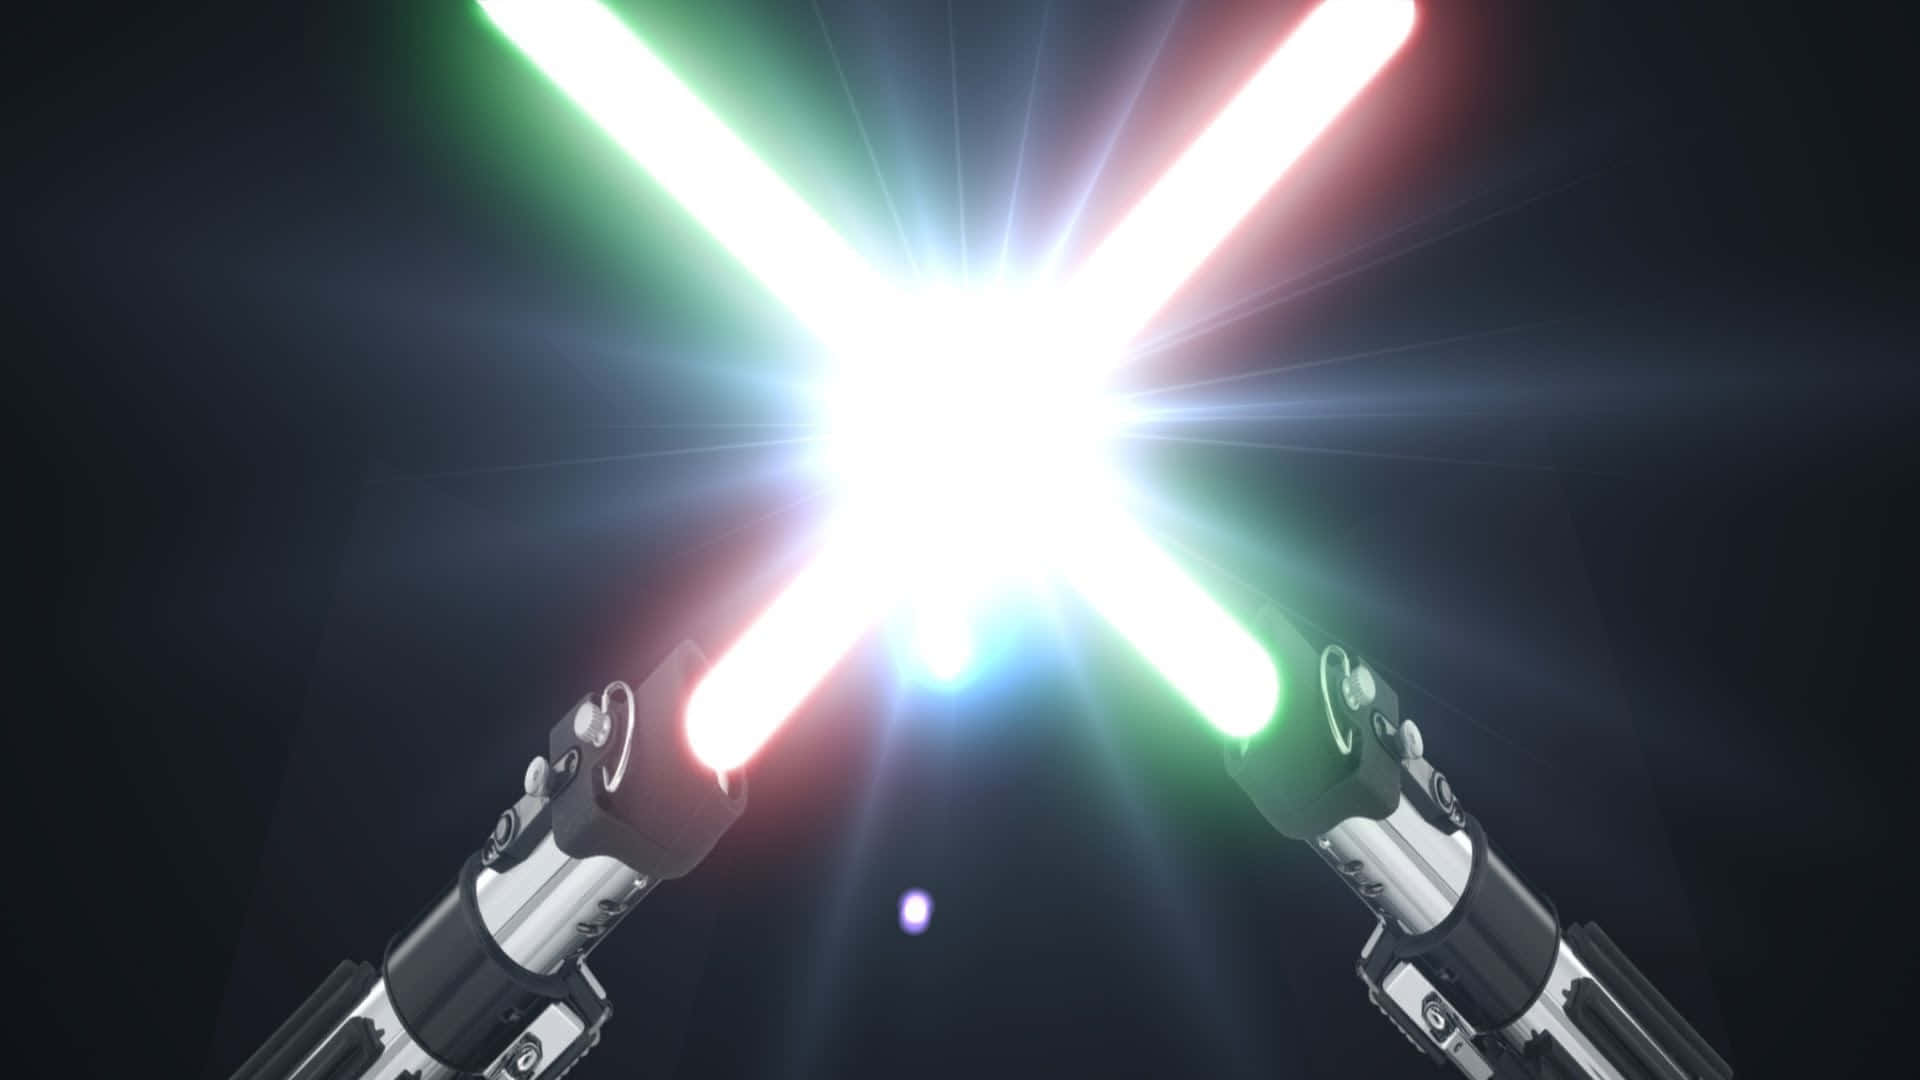 Epic Star Wars Lightsaber Battle Wallpaper